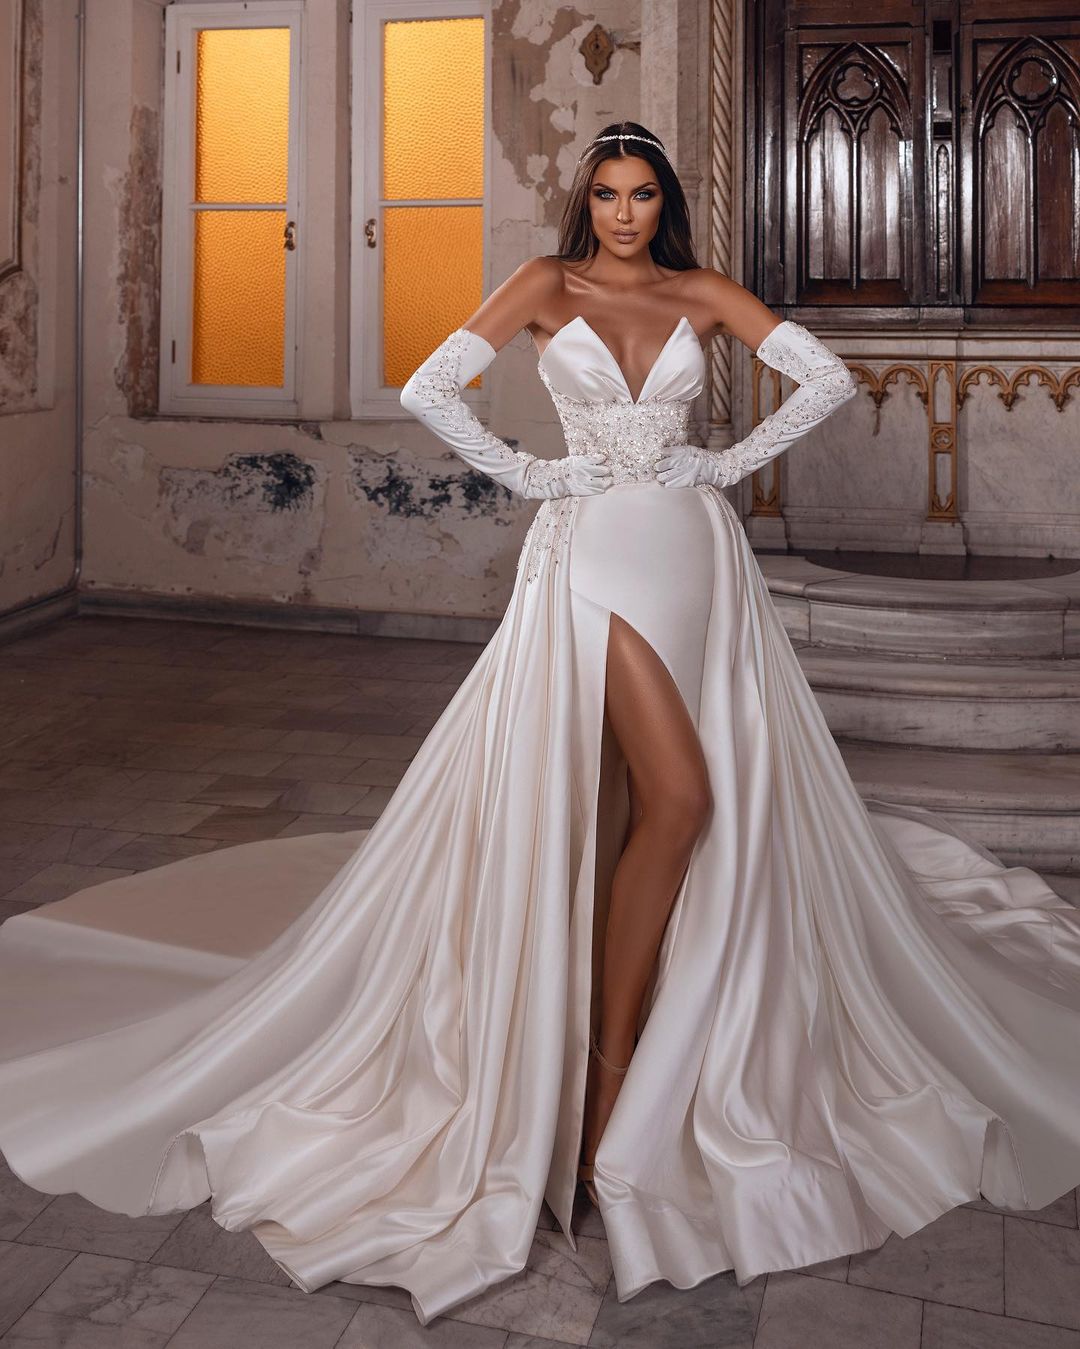 Eleora Beautiful Wedding Dress